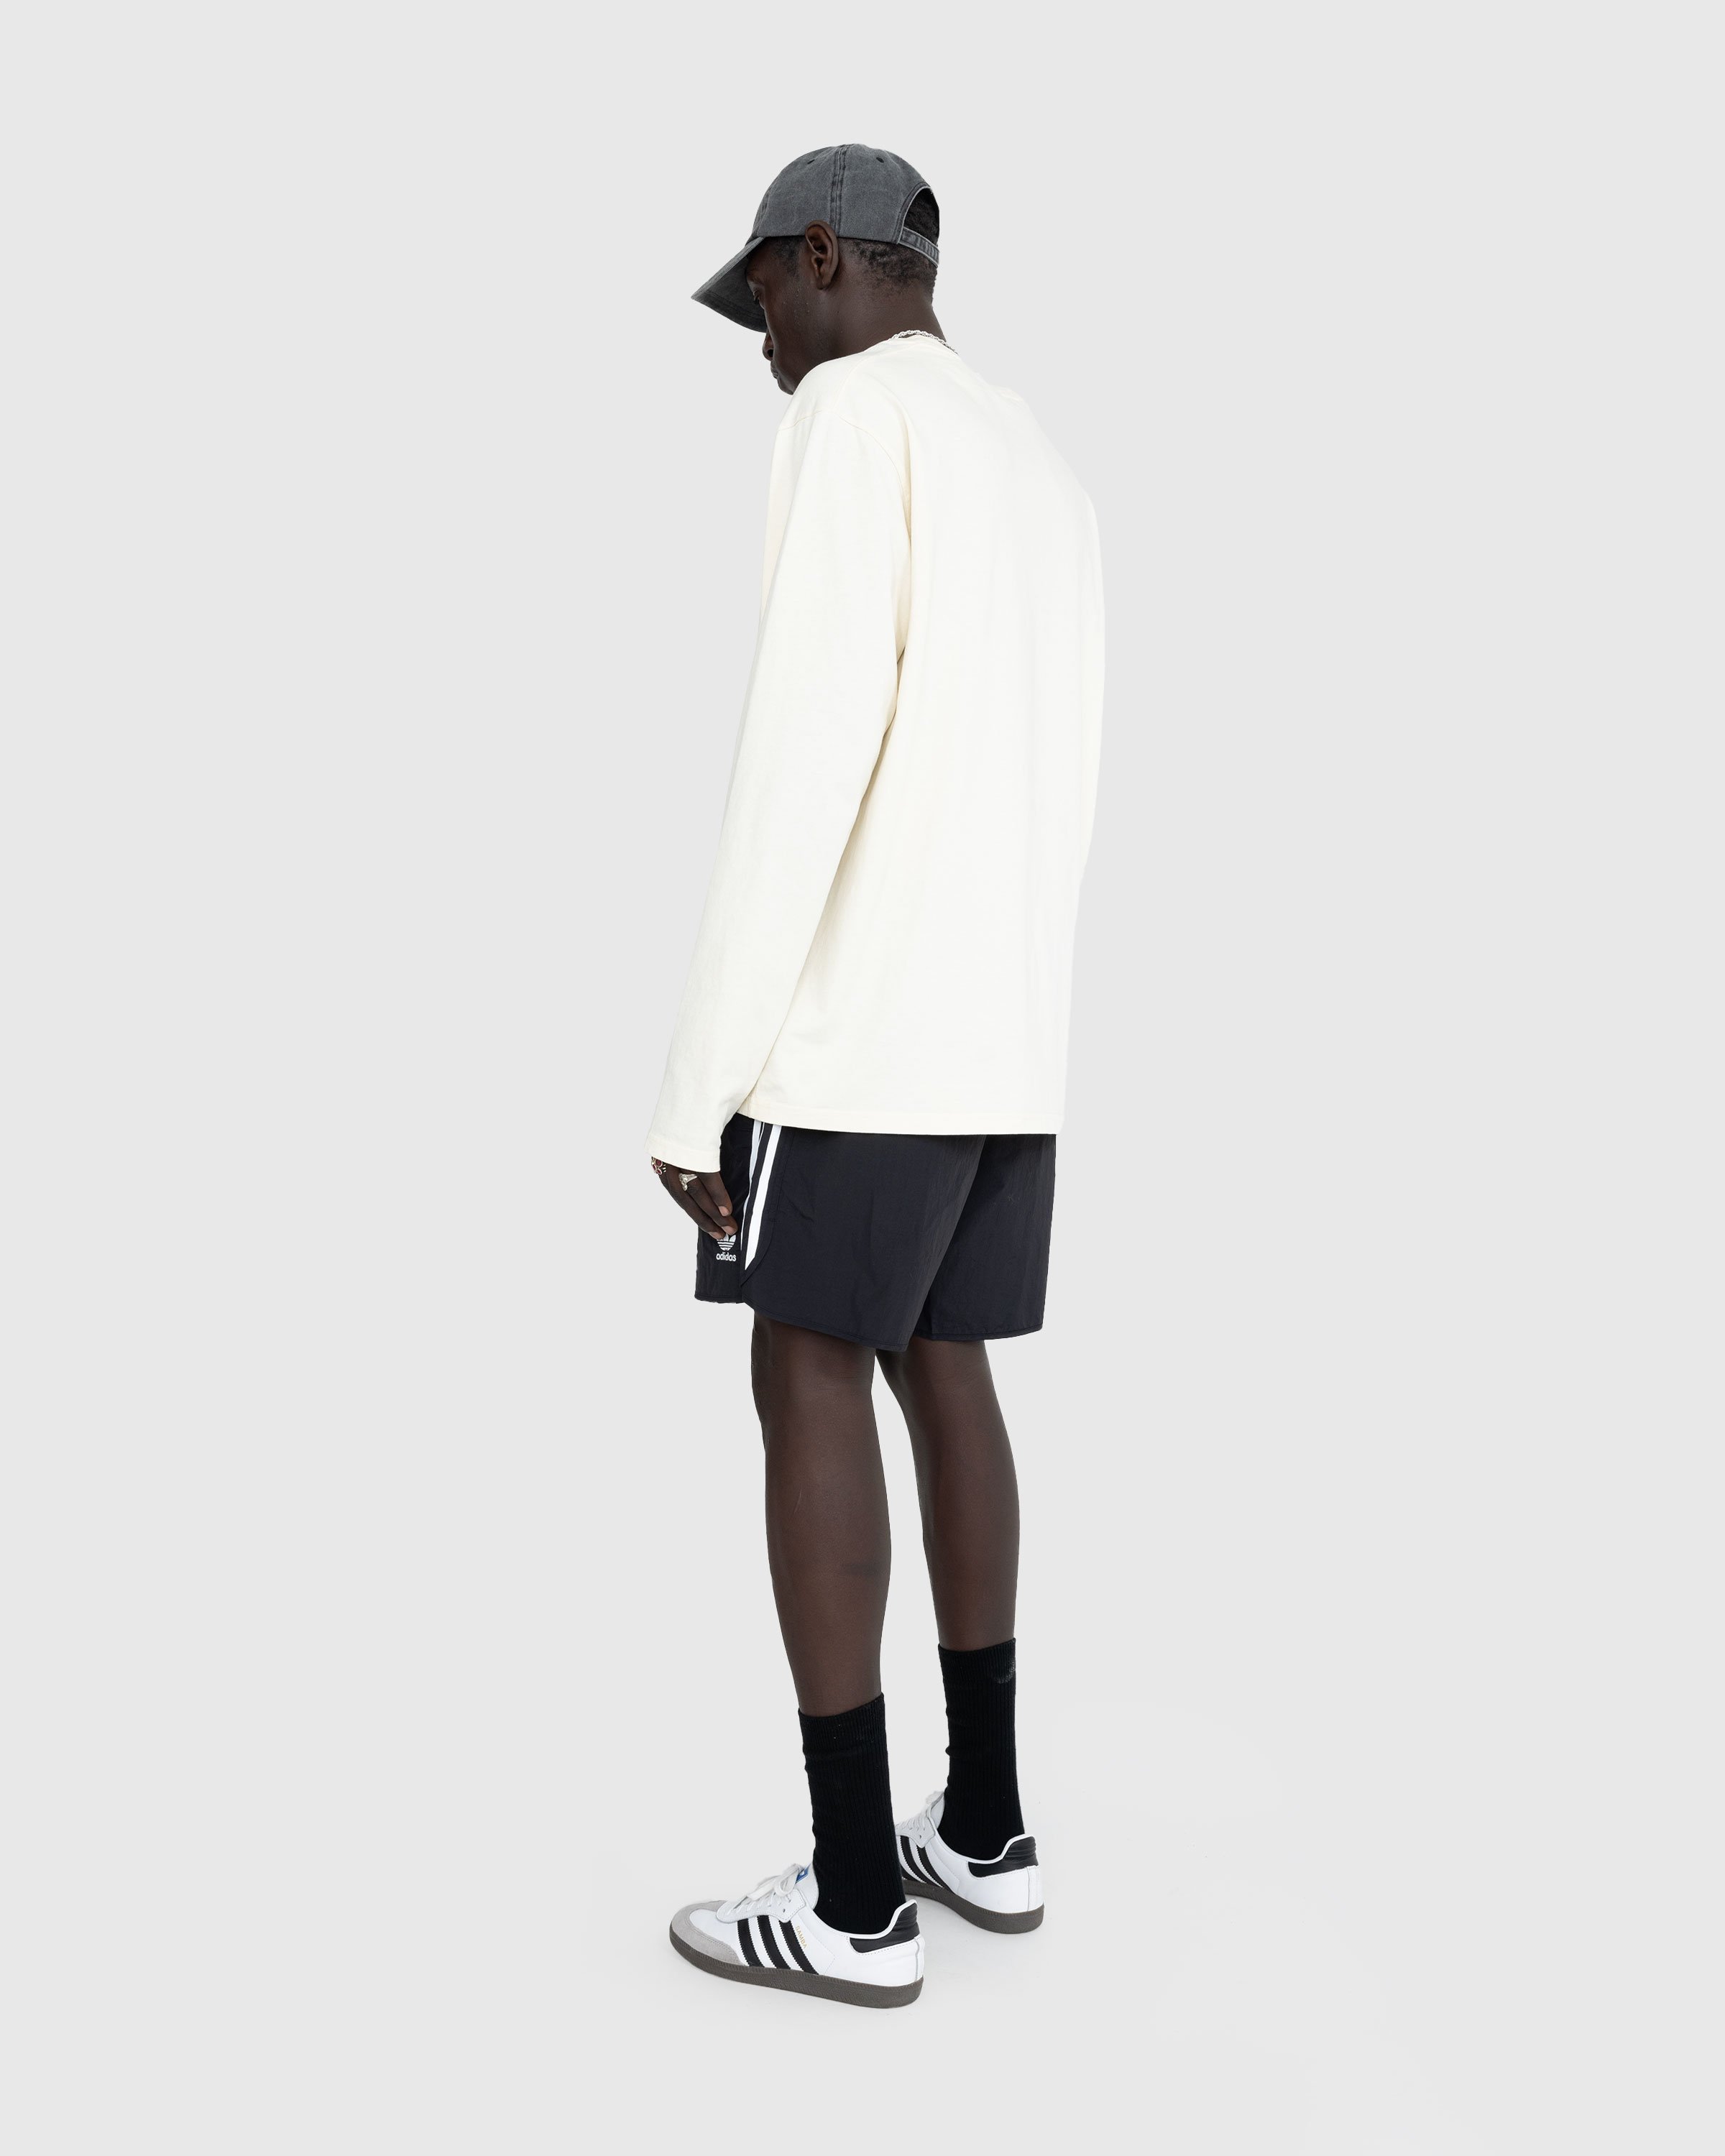 Adidas - SPRINTER SHORTS BLACK - Clothing - Black - Image 4